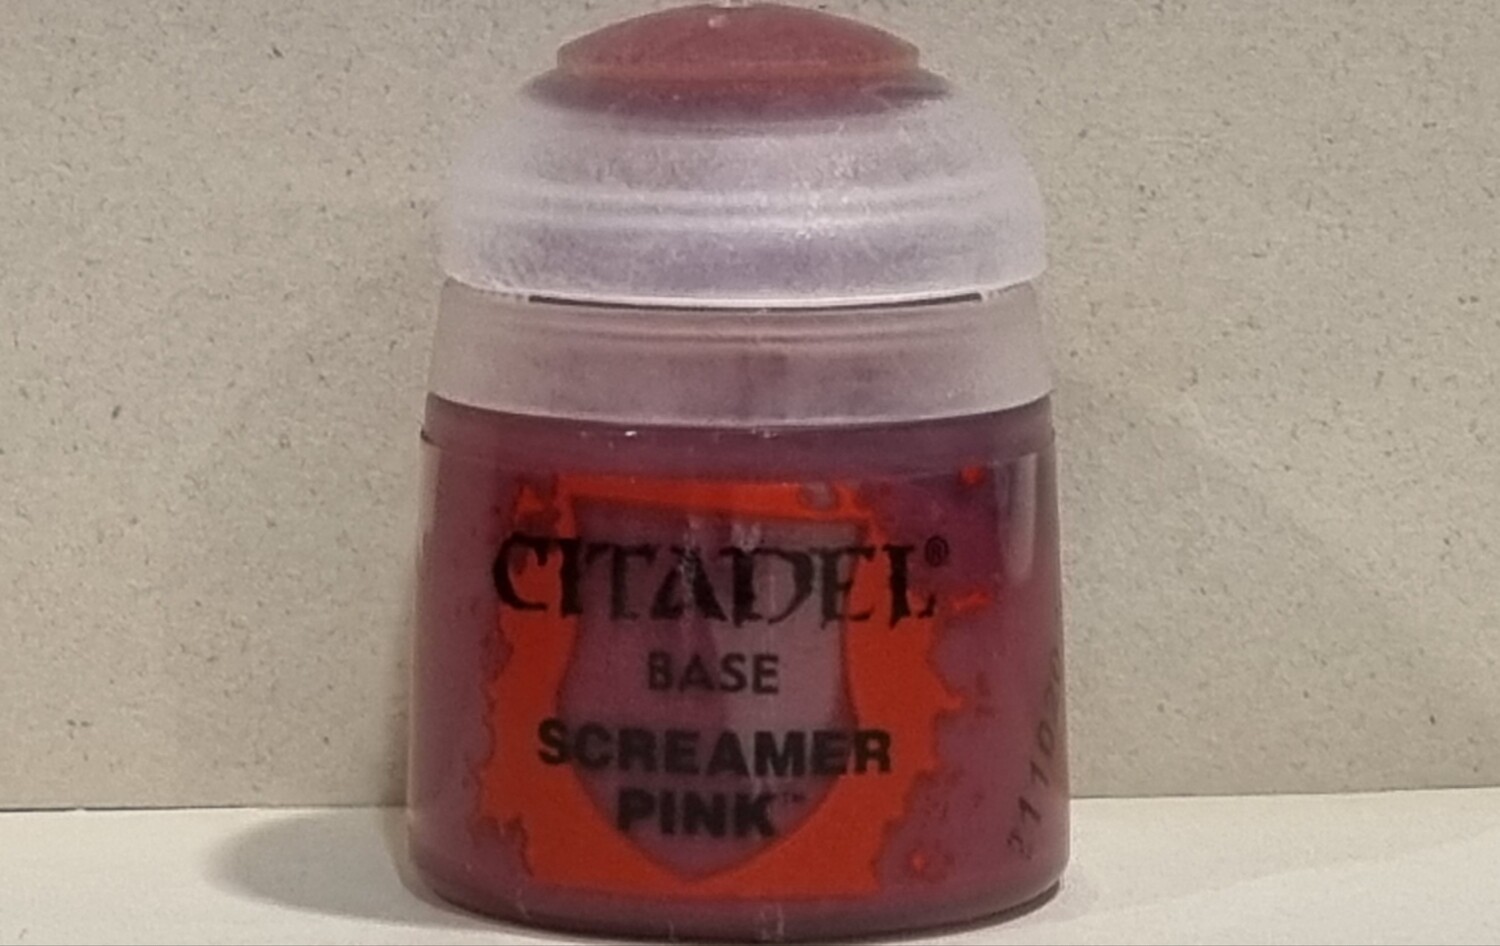 Citadel, Paint, Base, Screamer Pink, 12ml, 21-33